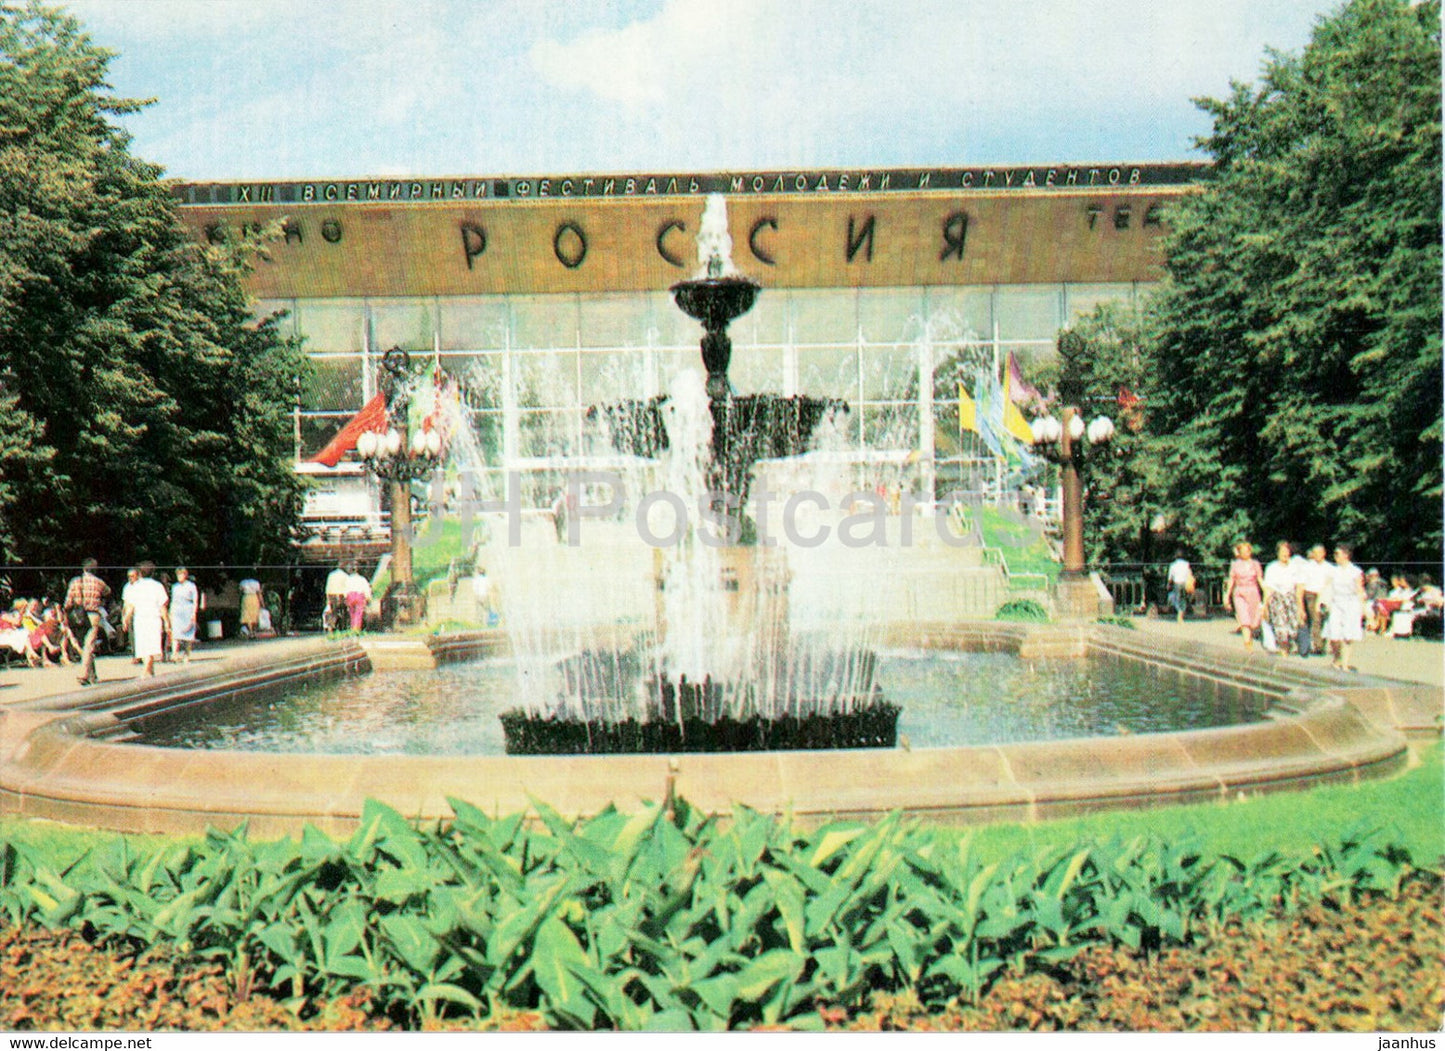 Moscow - cinema theatre Rossiya - 1986 - Russia USSR - unused - JH Postcards